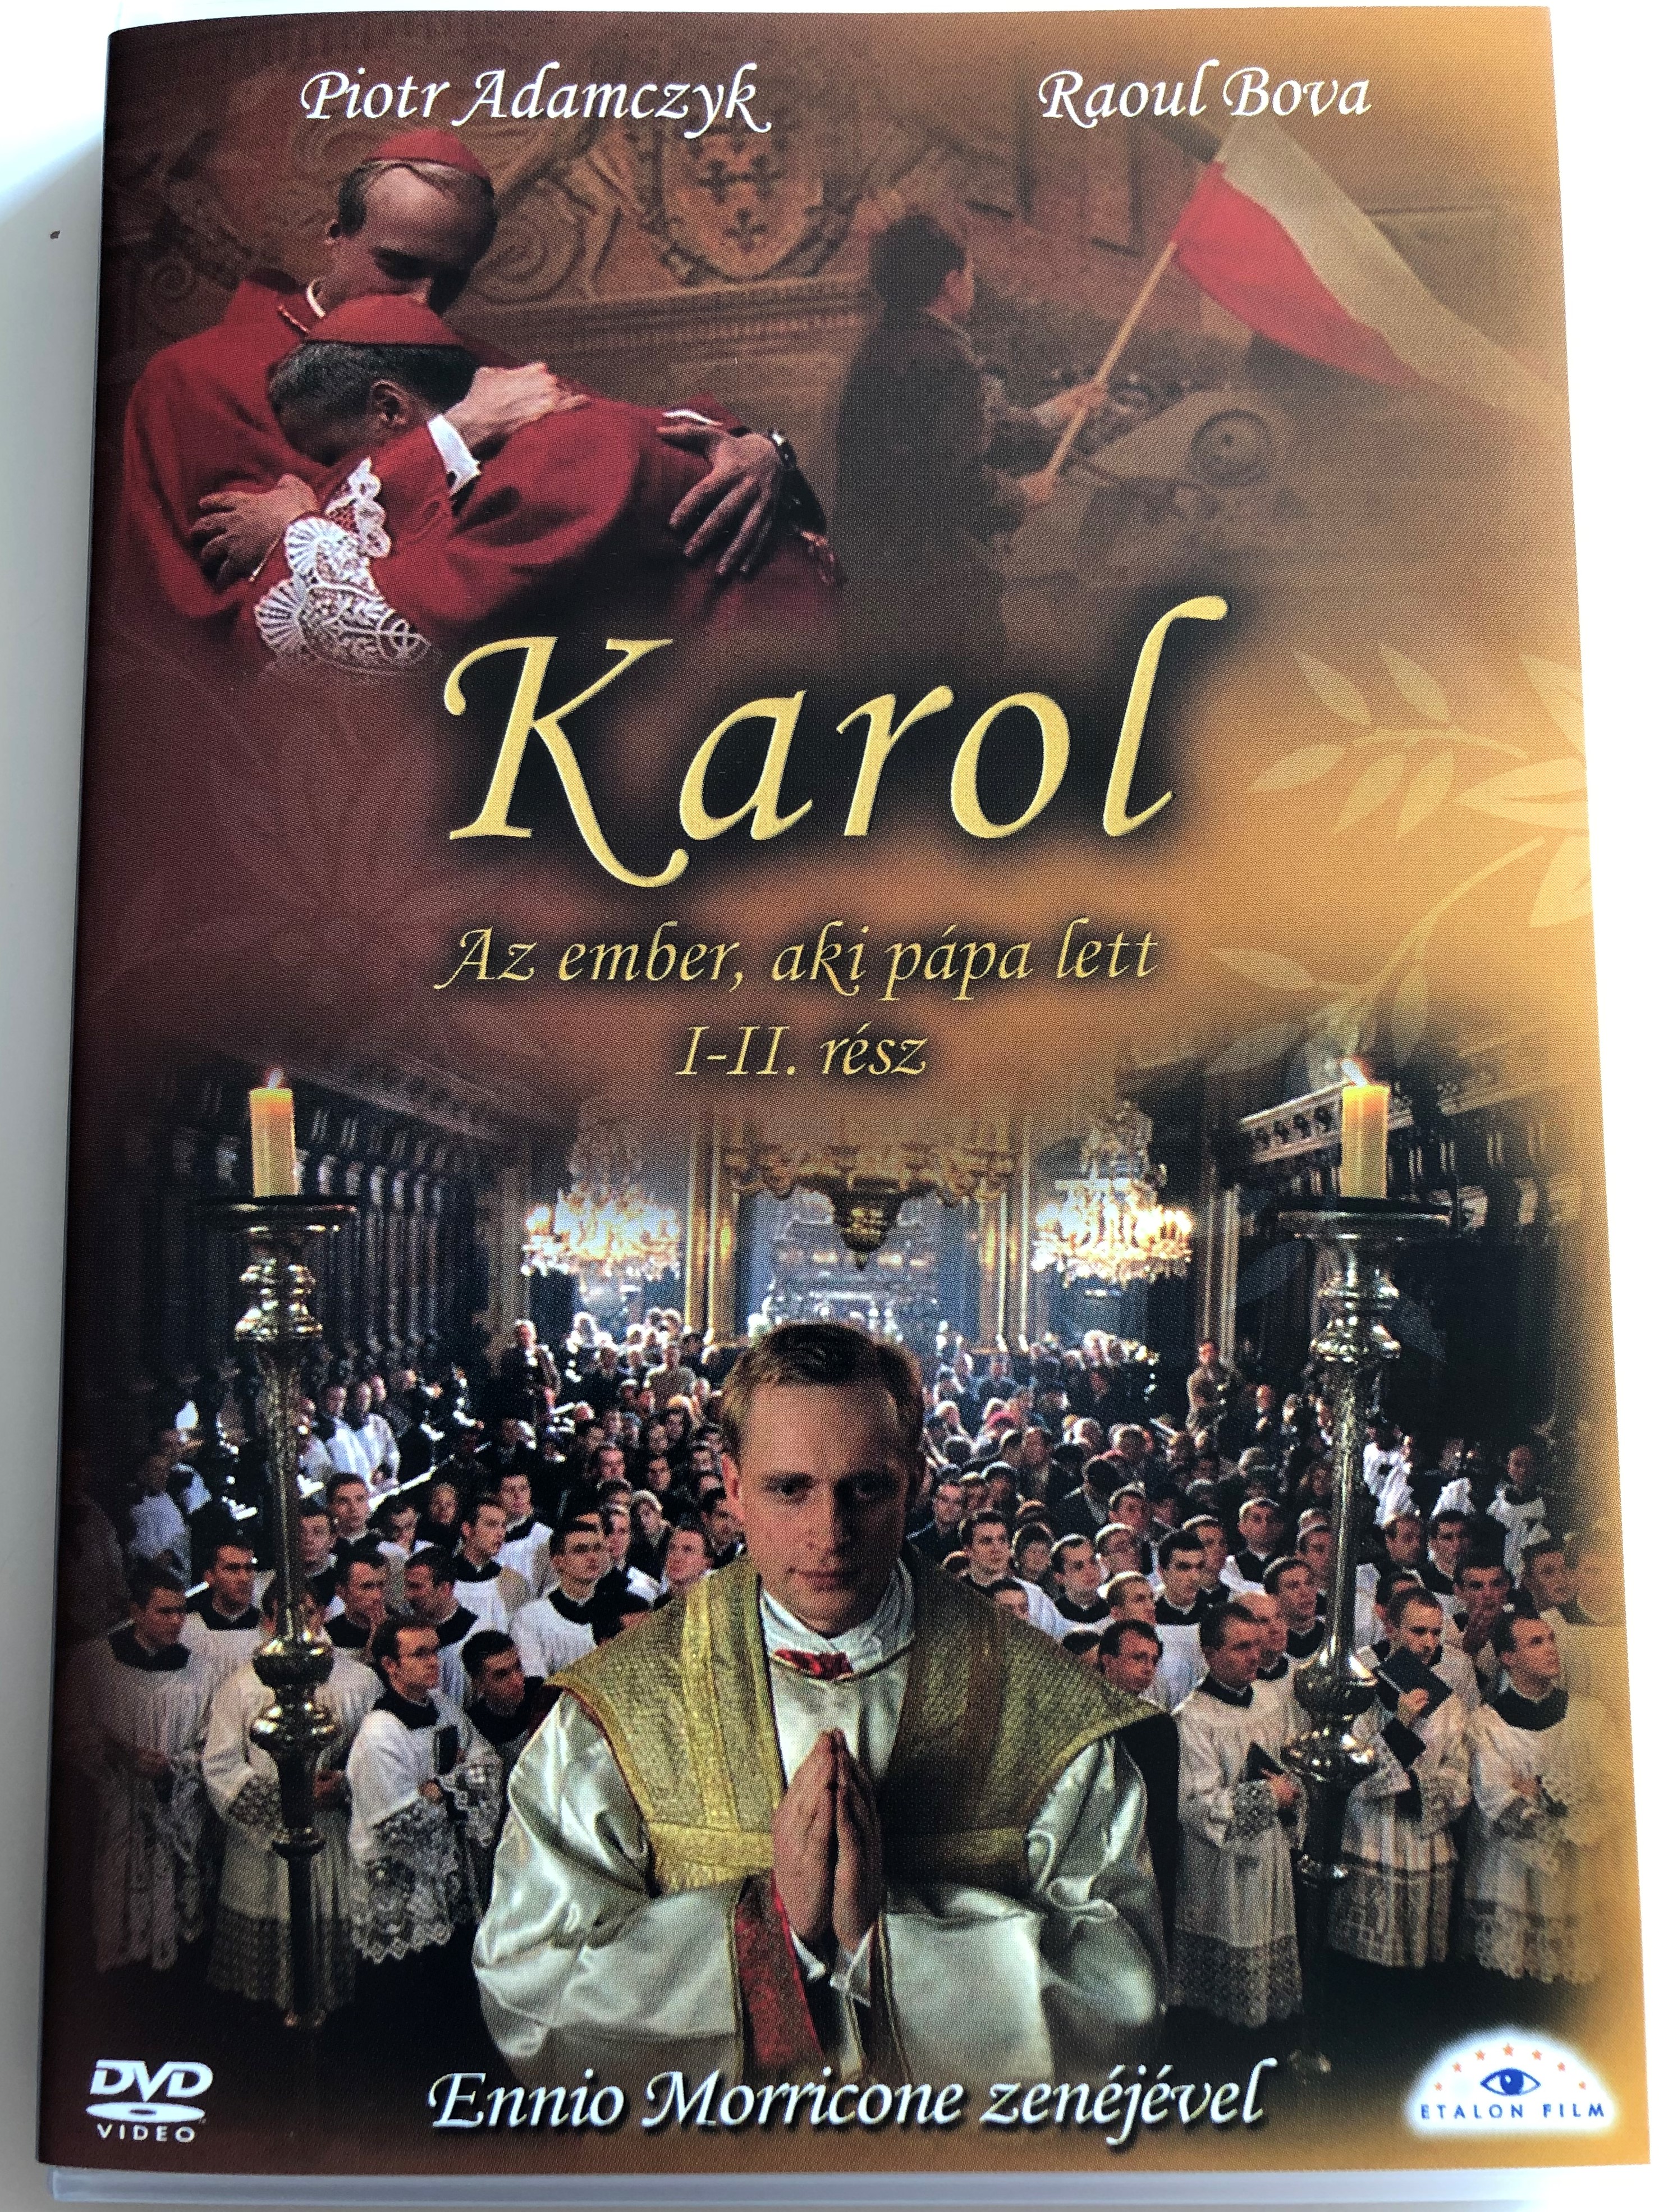 karol-un-uomo-diventato-papa-karol-a-man-who-became-pope-dvd-2005-karol-az-ember-aki-p-pa-lett-directed-by-giacomo-battiato-starring-piotr-adamczyk-malgorzata-bela-ken-duken-hristo-shopov-ennio-fantastichini-vio-1-.jpg